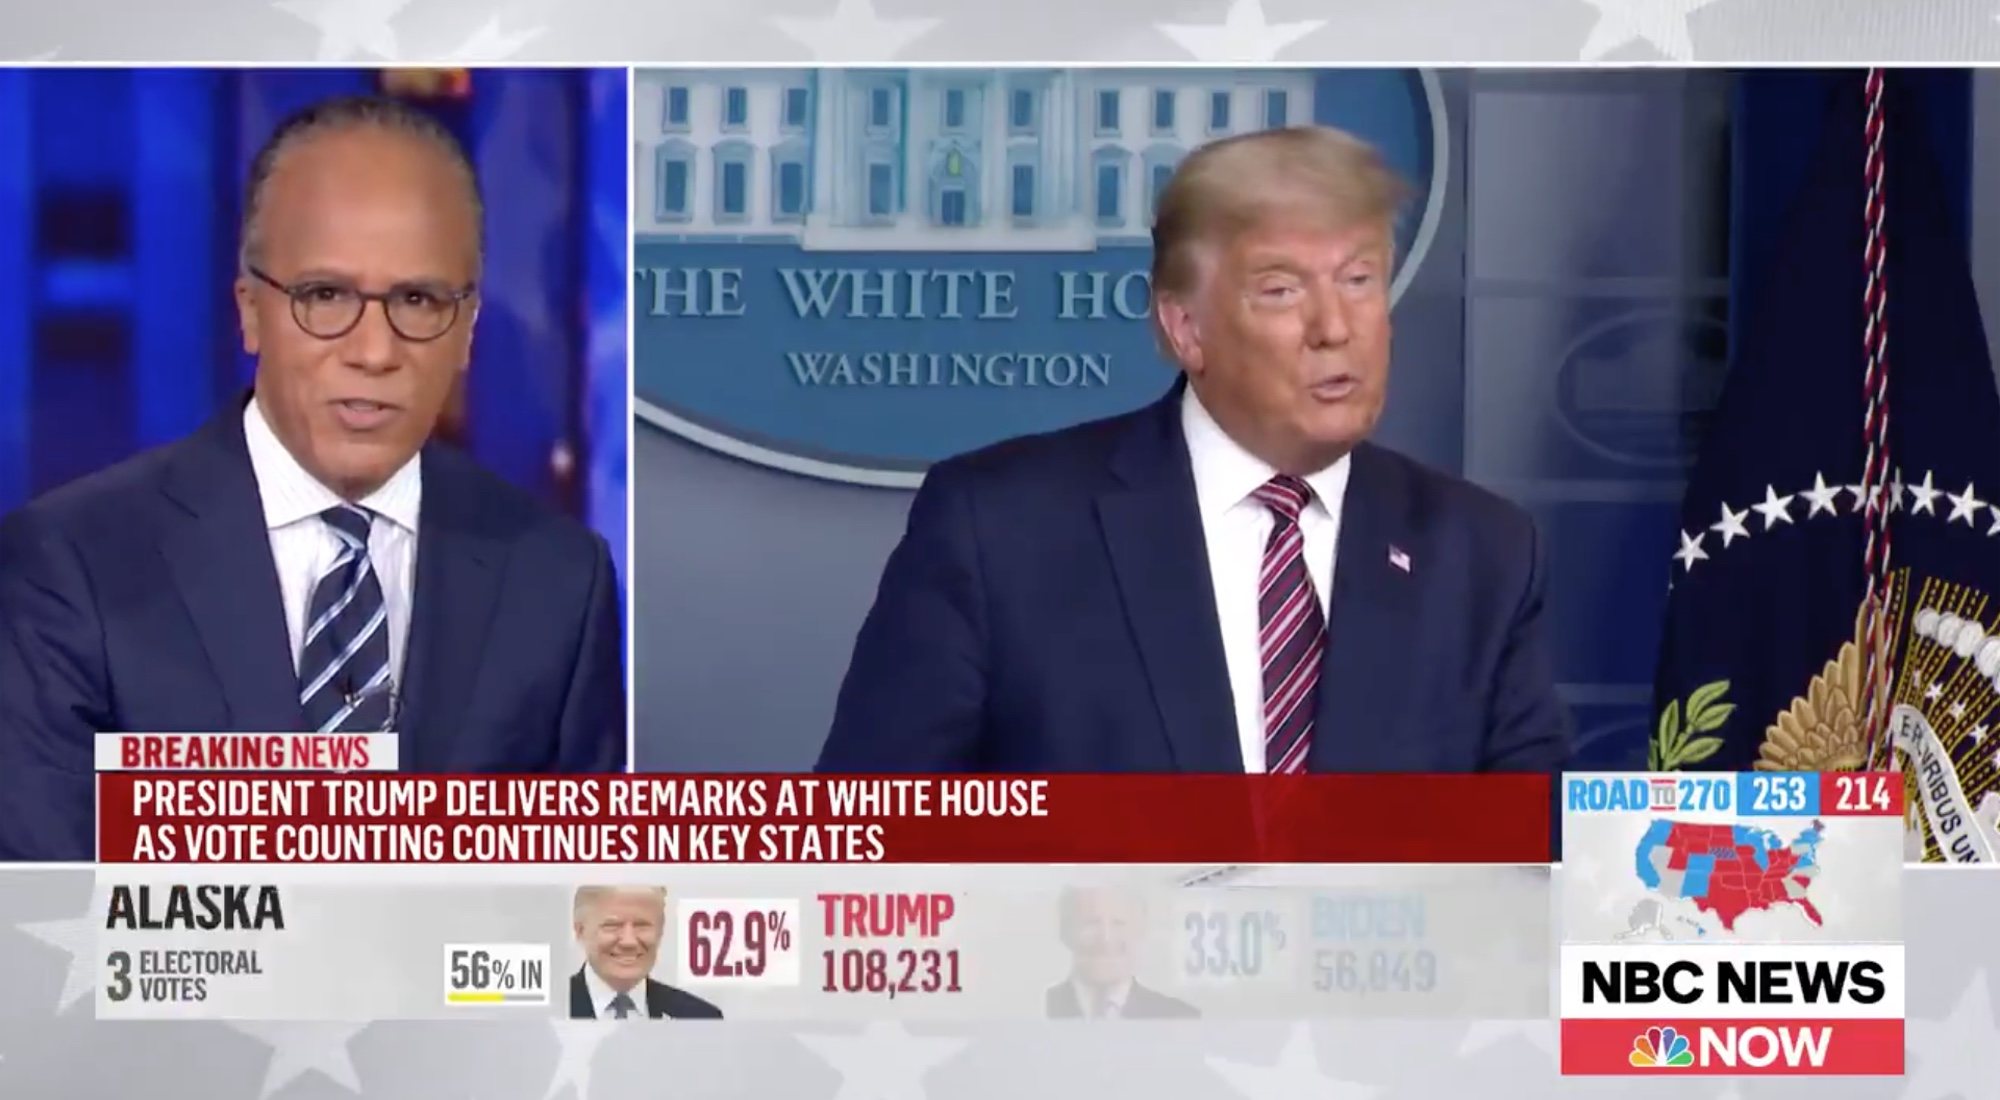 Lester Holt interrumpe la comparecencia de Trump en directo (NBC)